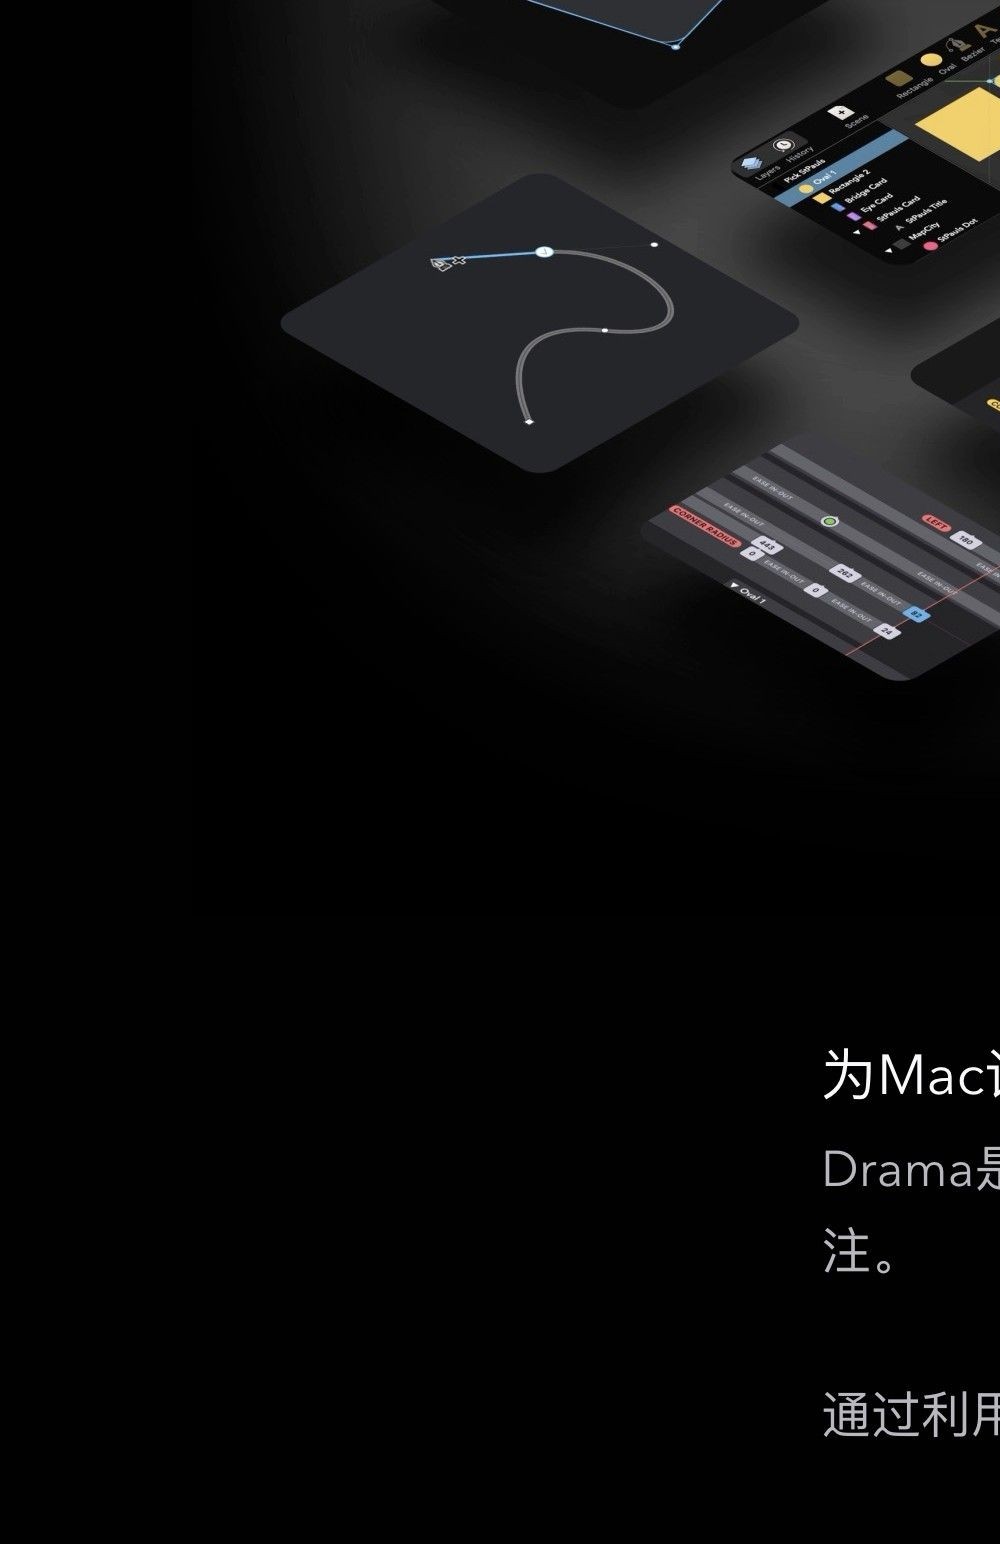 Drama for Mac工具有什么用